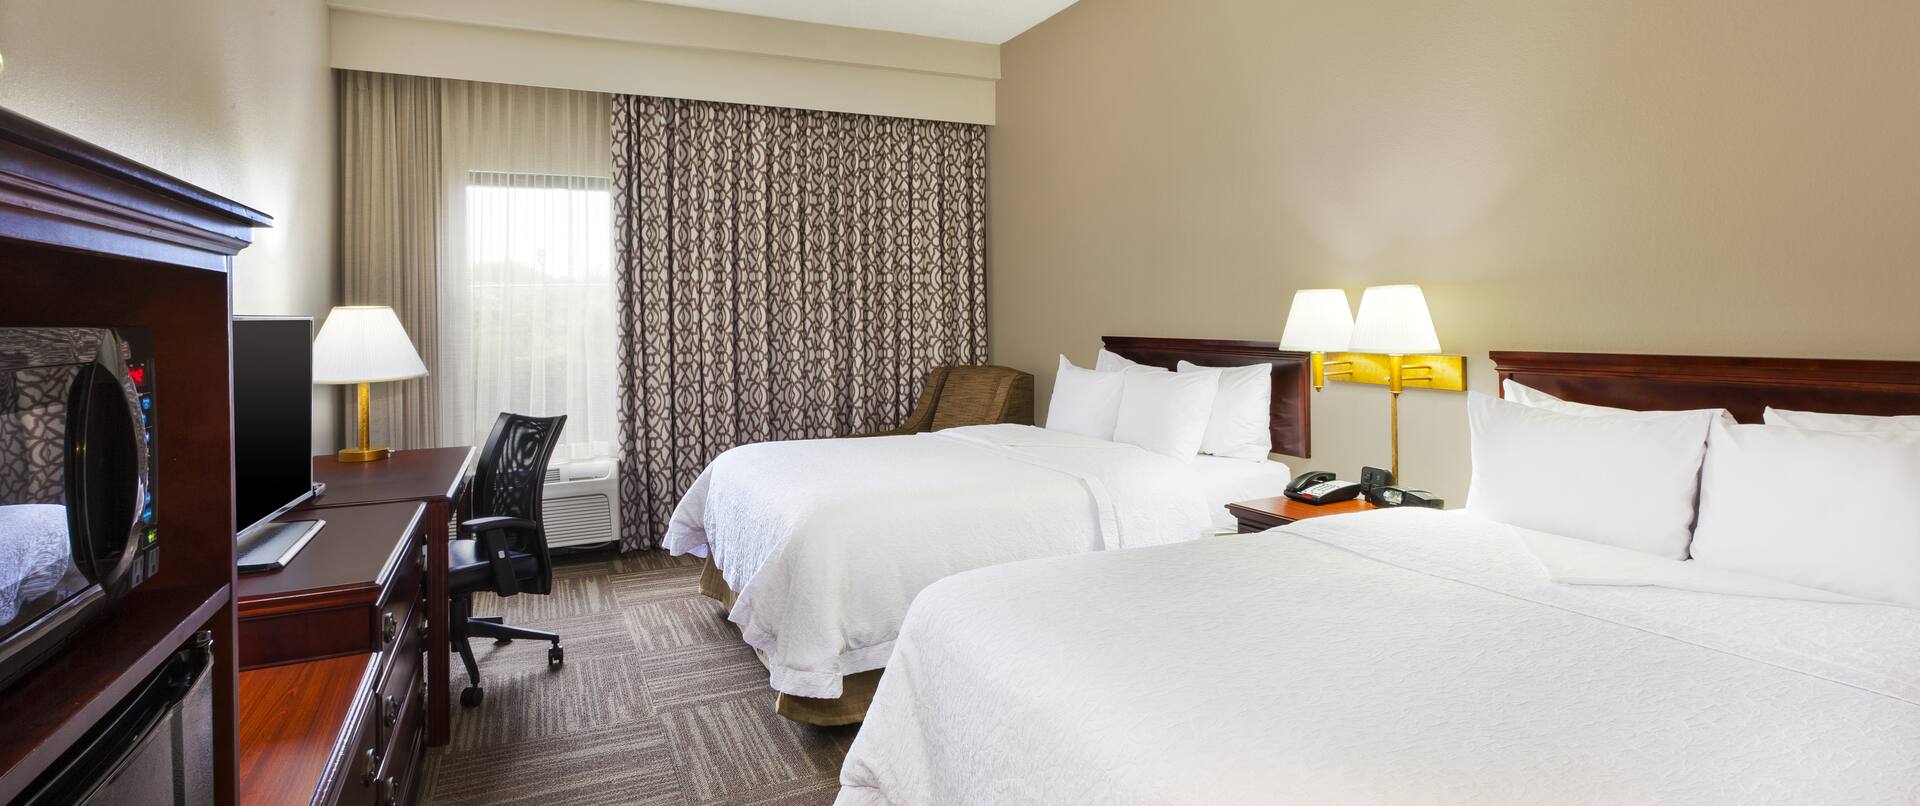 Hampton Inn Marietta Hotel, OH - Two Queen Beds Guest Room